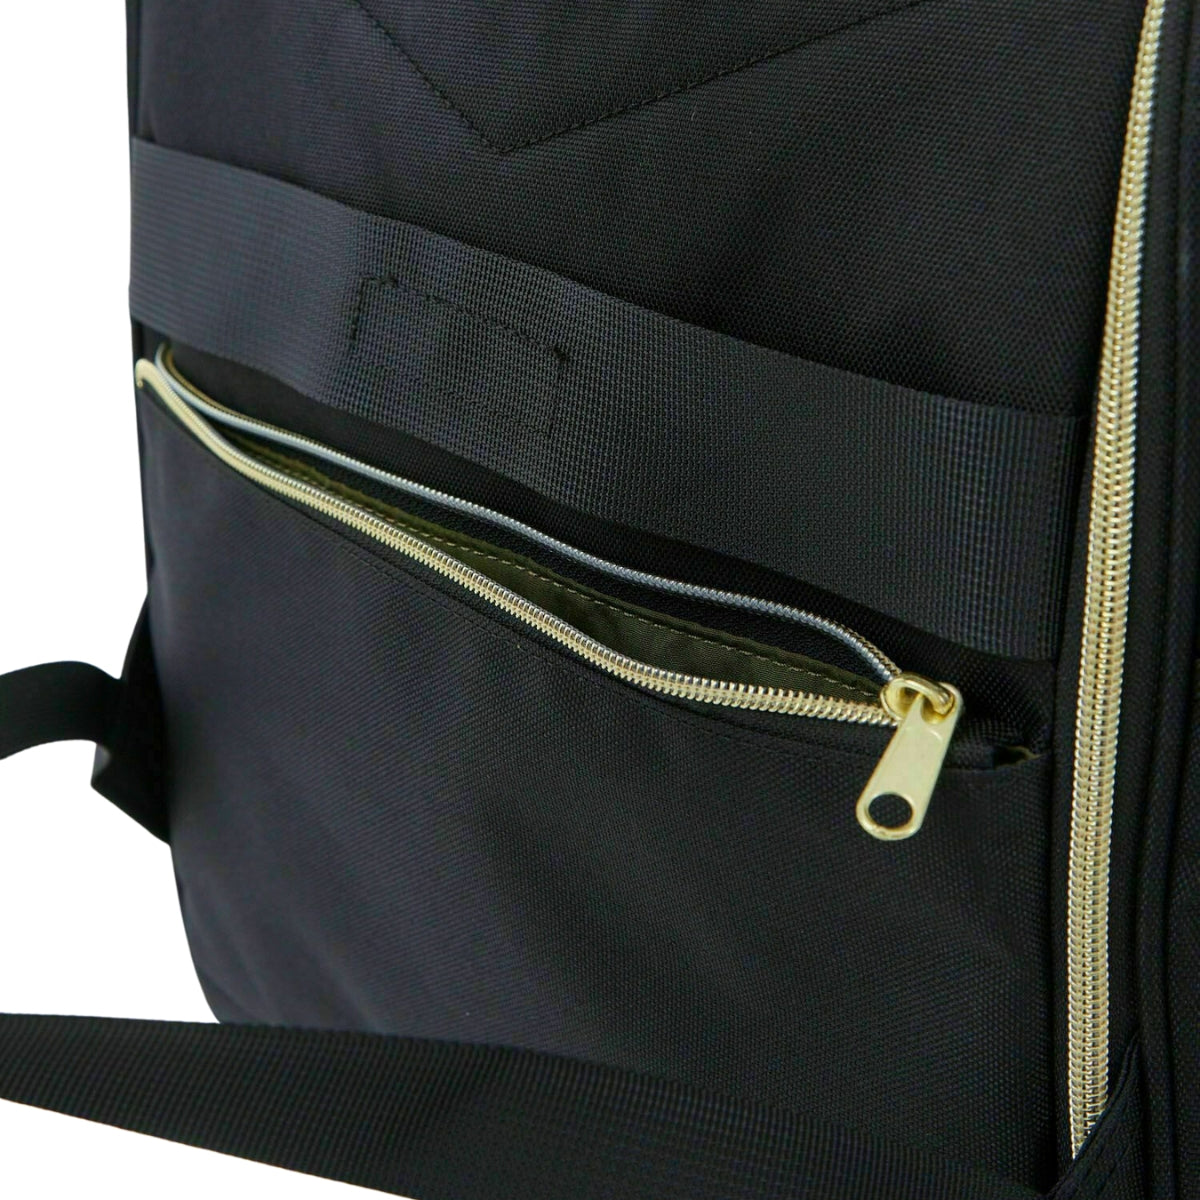 Anello Cross Bottle Backpack Large in Black